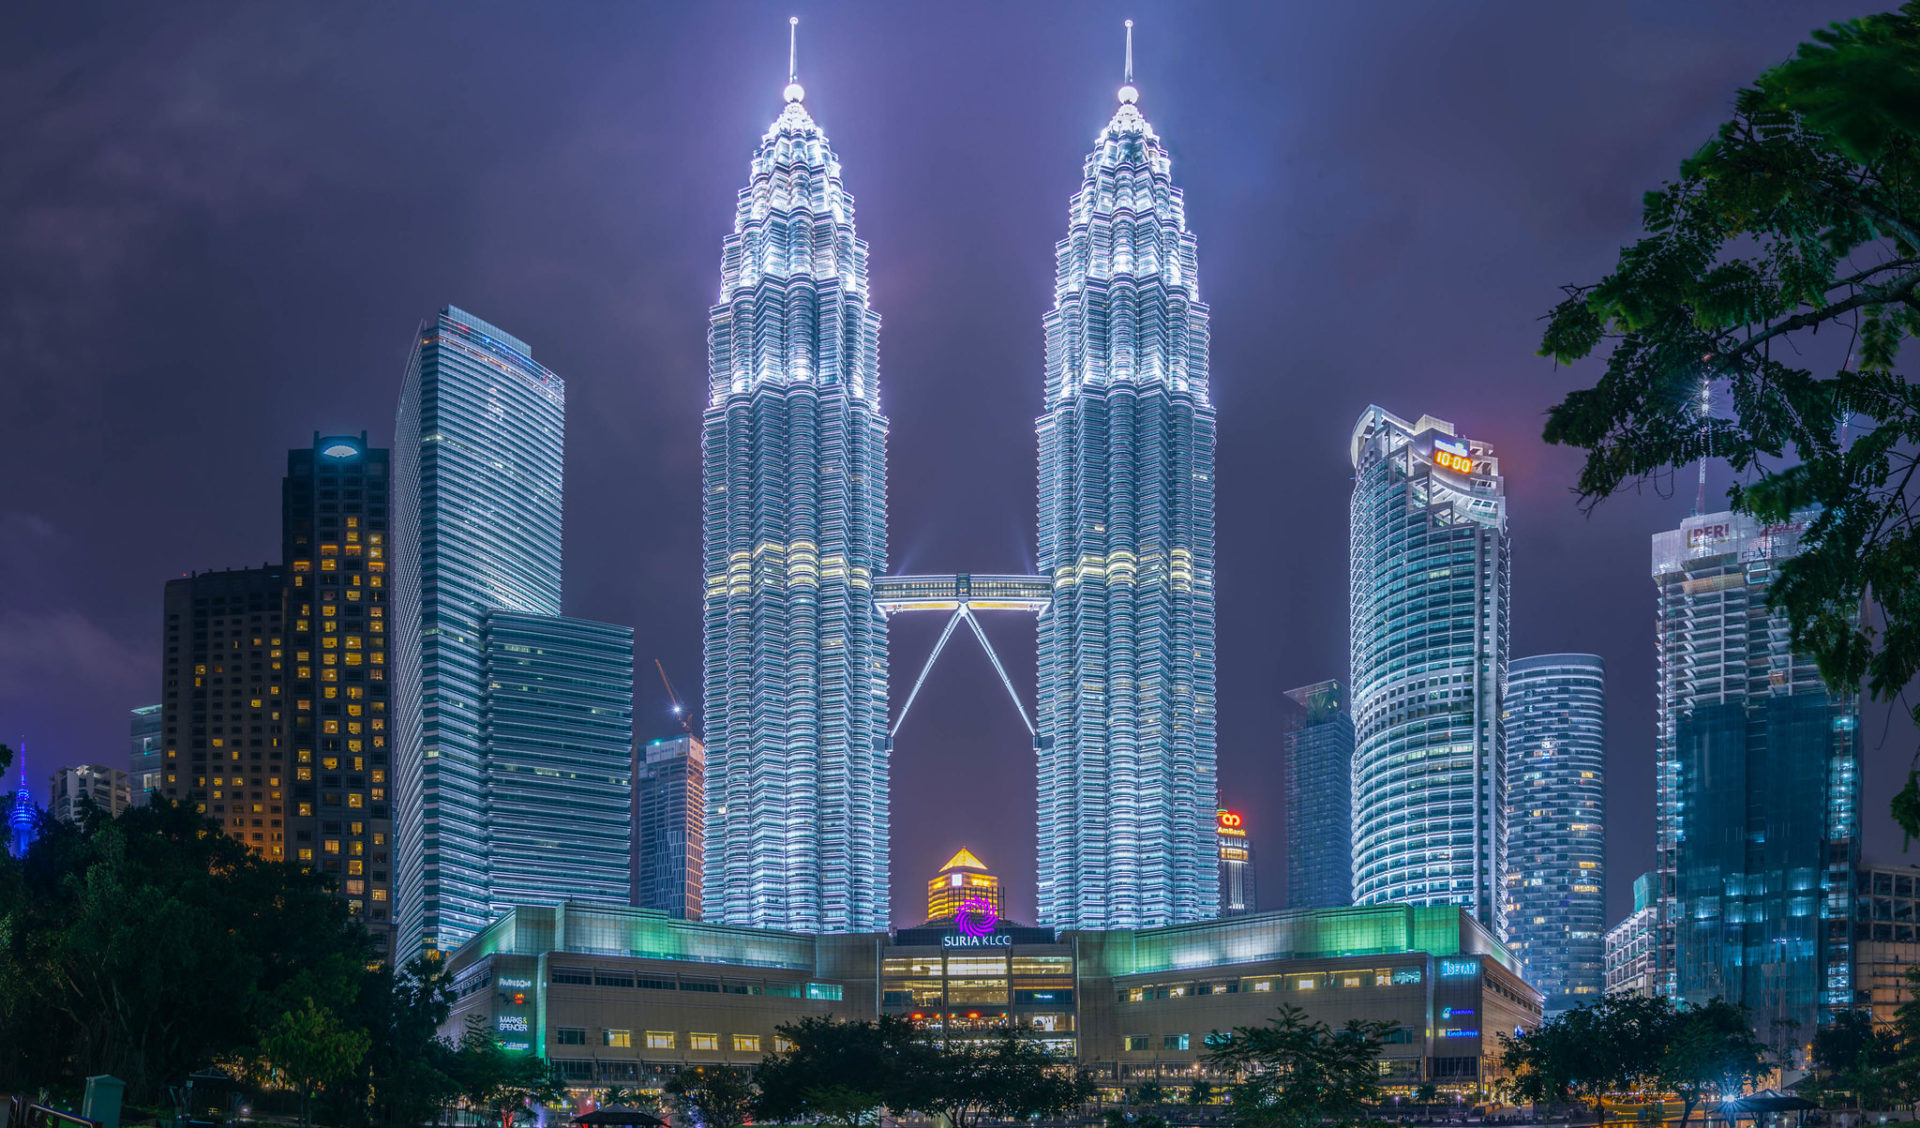 Petronas Twin Towers: The Iconic Skyscrapers of Kuala Lumpur